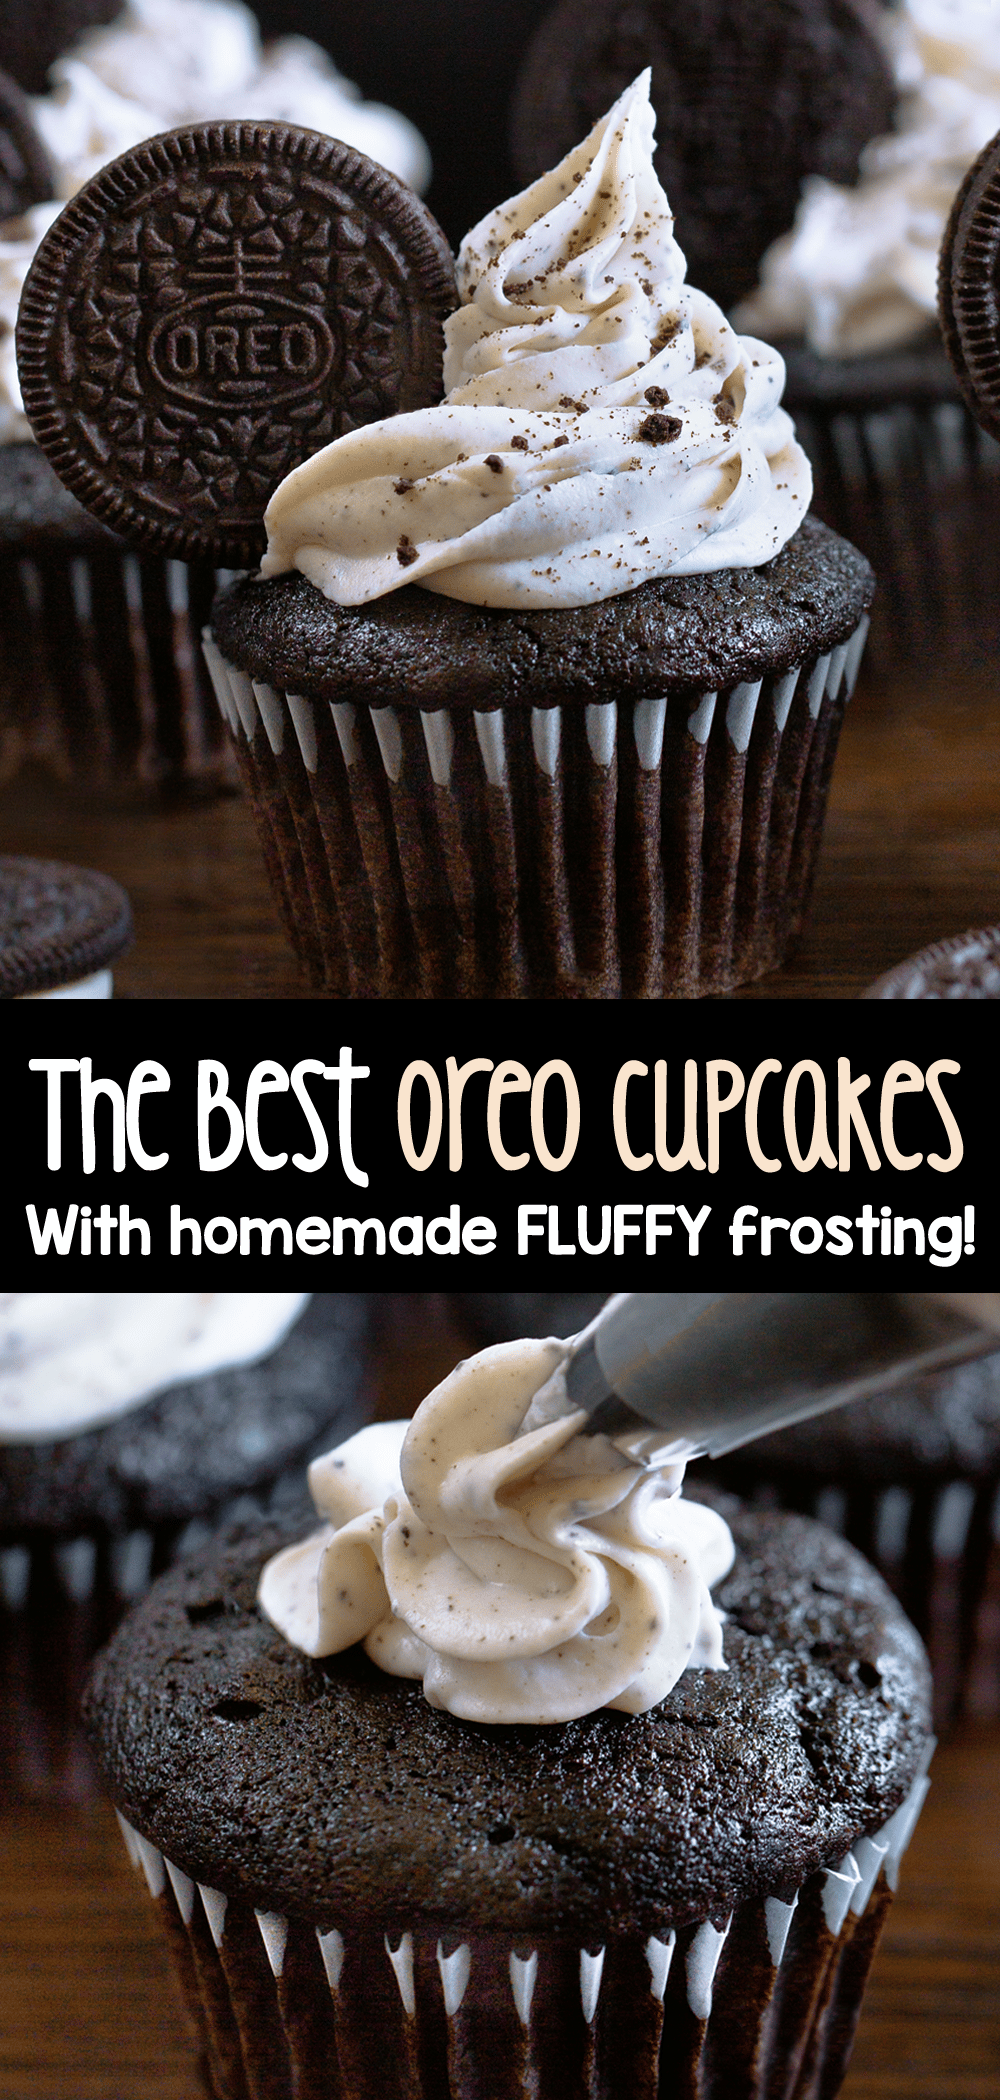 How To Make Oreo Cupcakes With Homemade Frosting - Oreo Cupcakes - with Cookies and Cream Frosting!